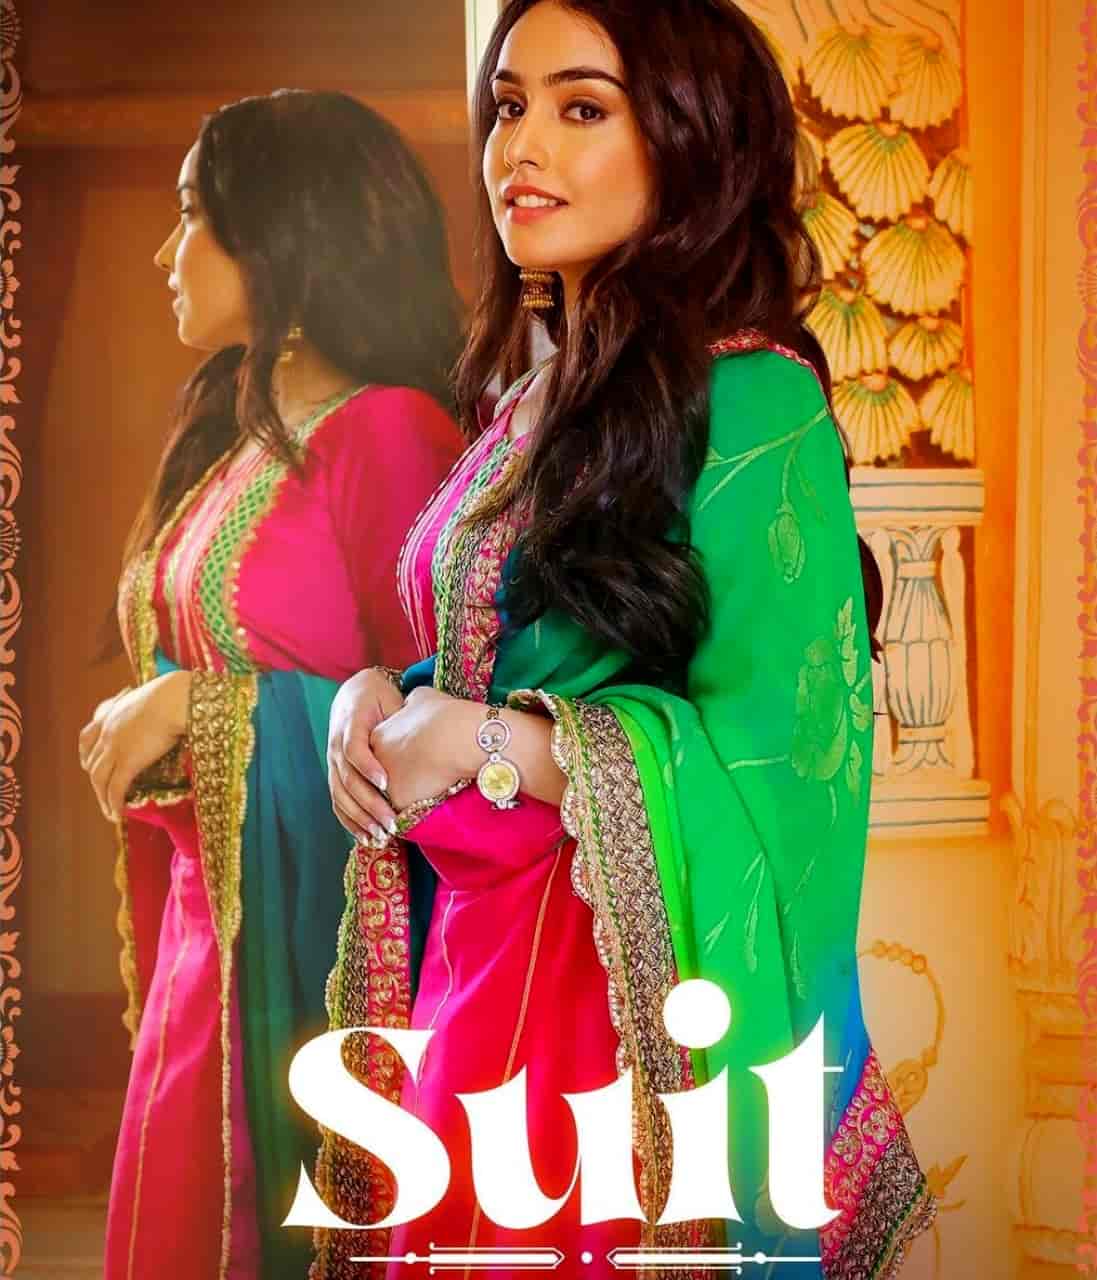 Suit Punjabi Song Image Features Barbie Maan